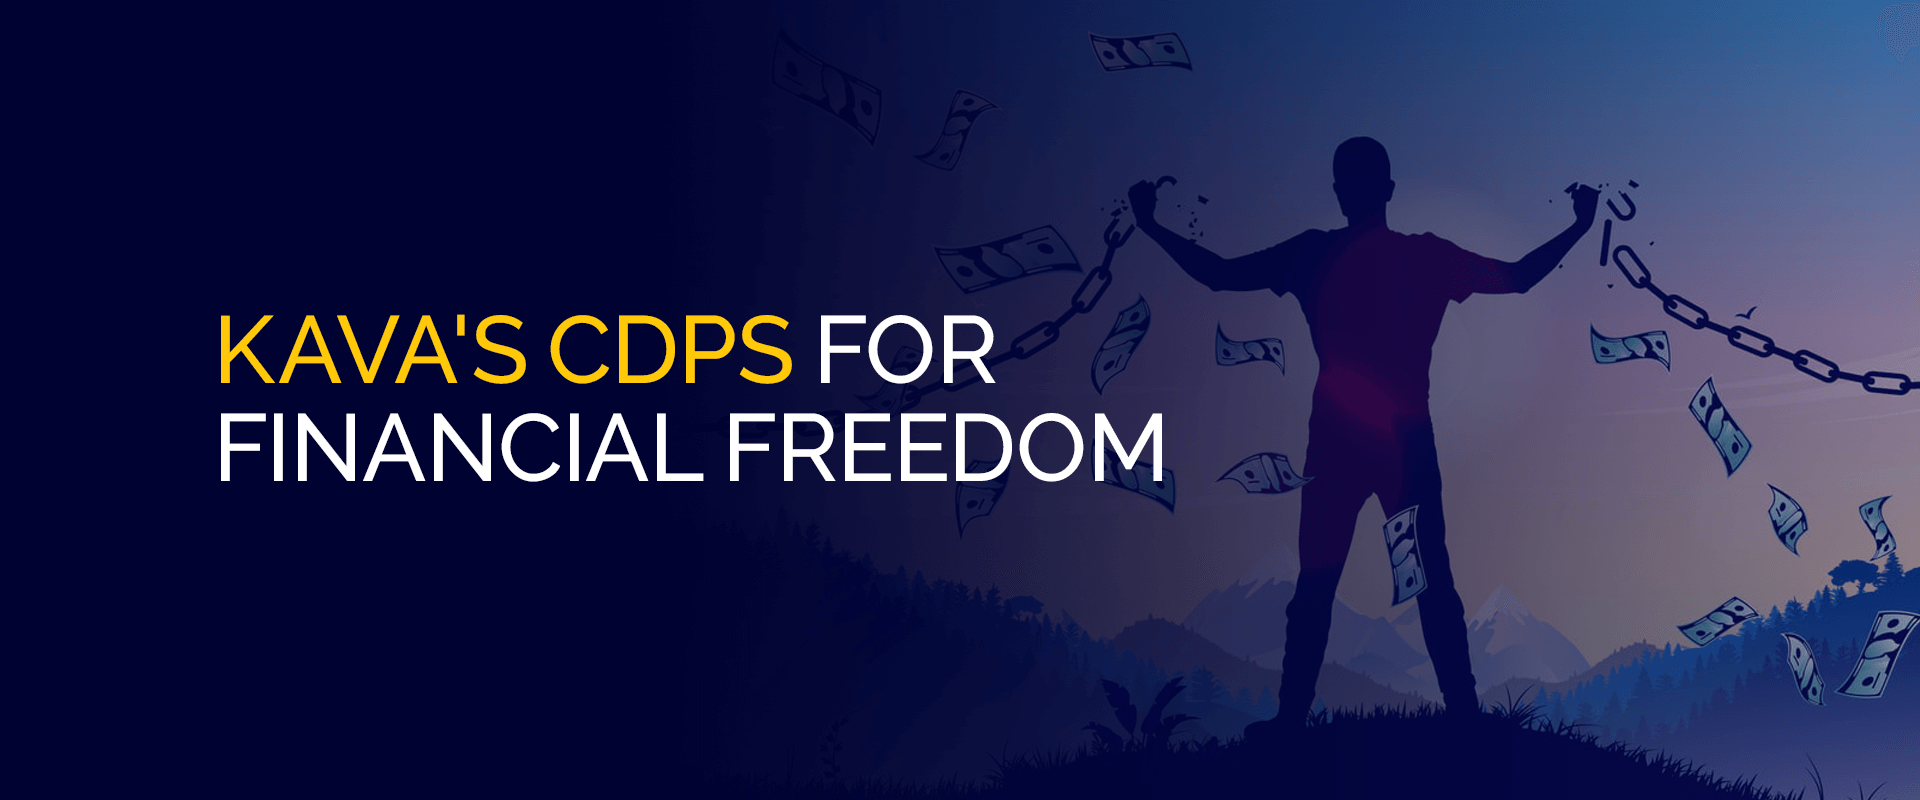 CDPs من Kava للحرية المالية